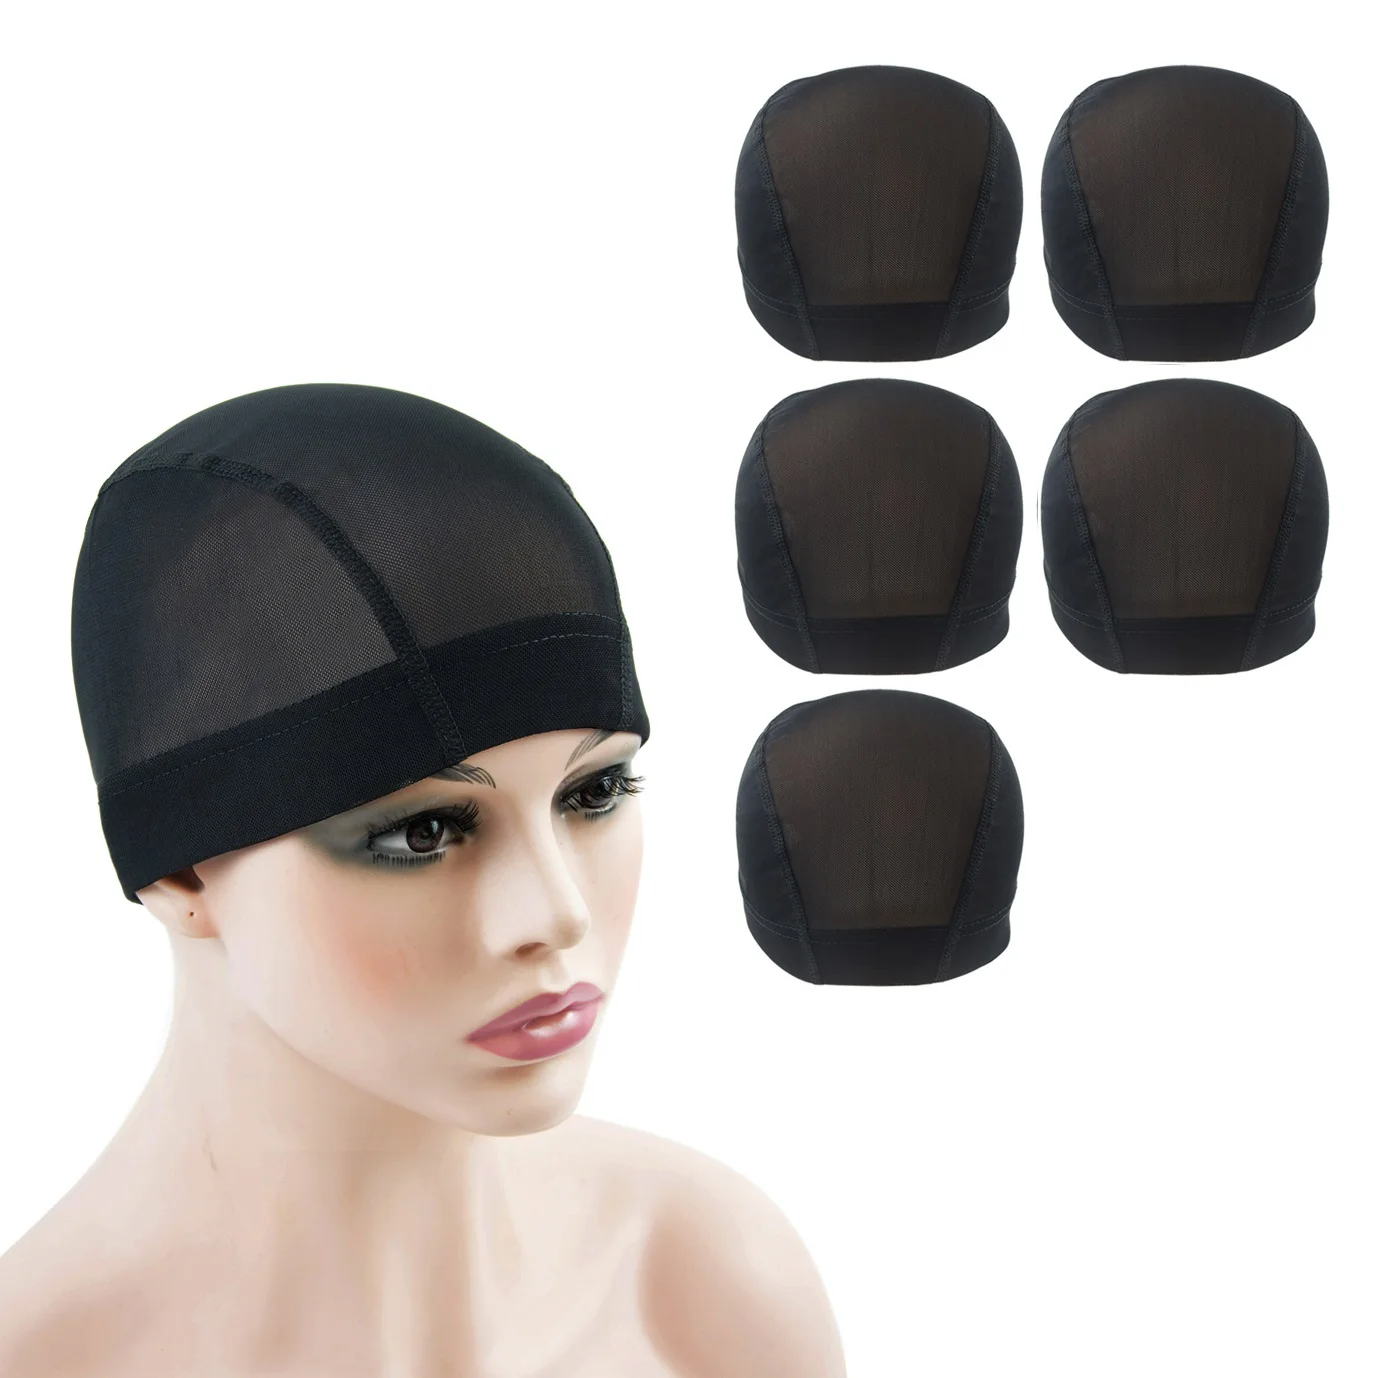 

5 Pieces Black Mesh Wig Cap Weaving Stretchable Cap Hair Net Elastic Nylon Mesh Dome Wig Cap for Wig Making